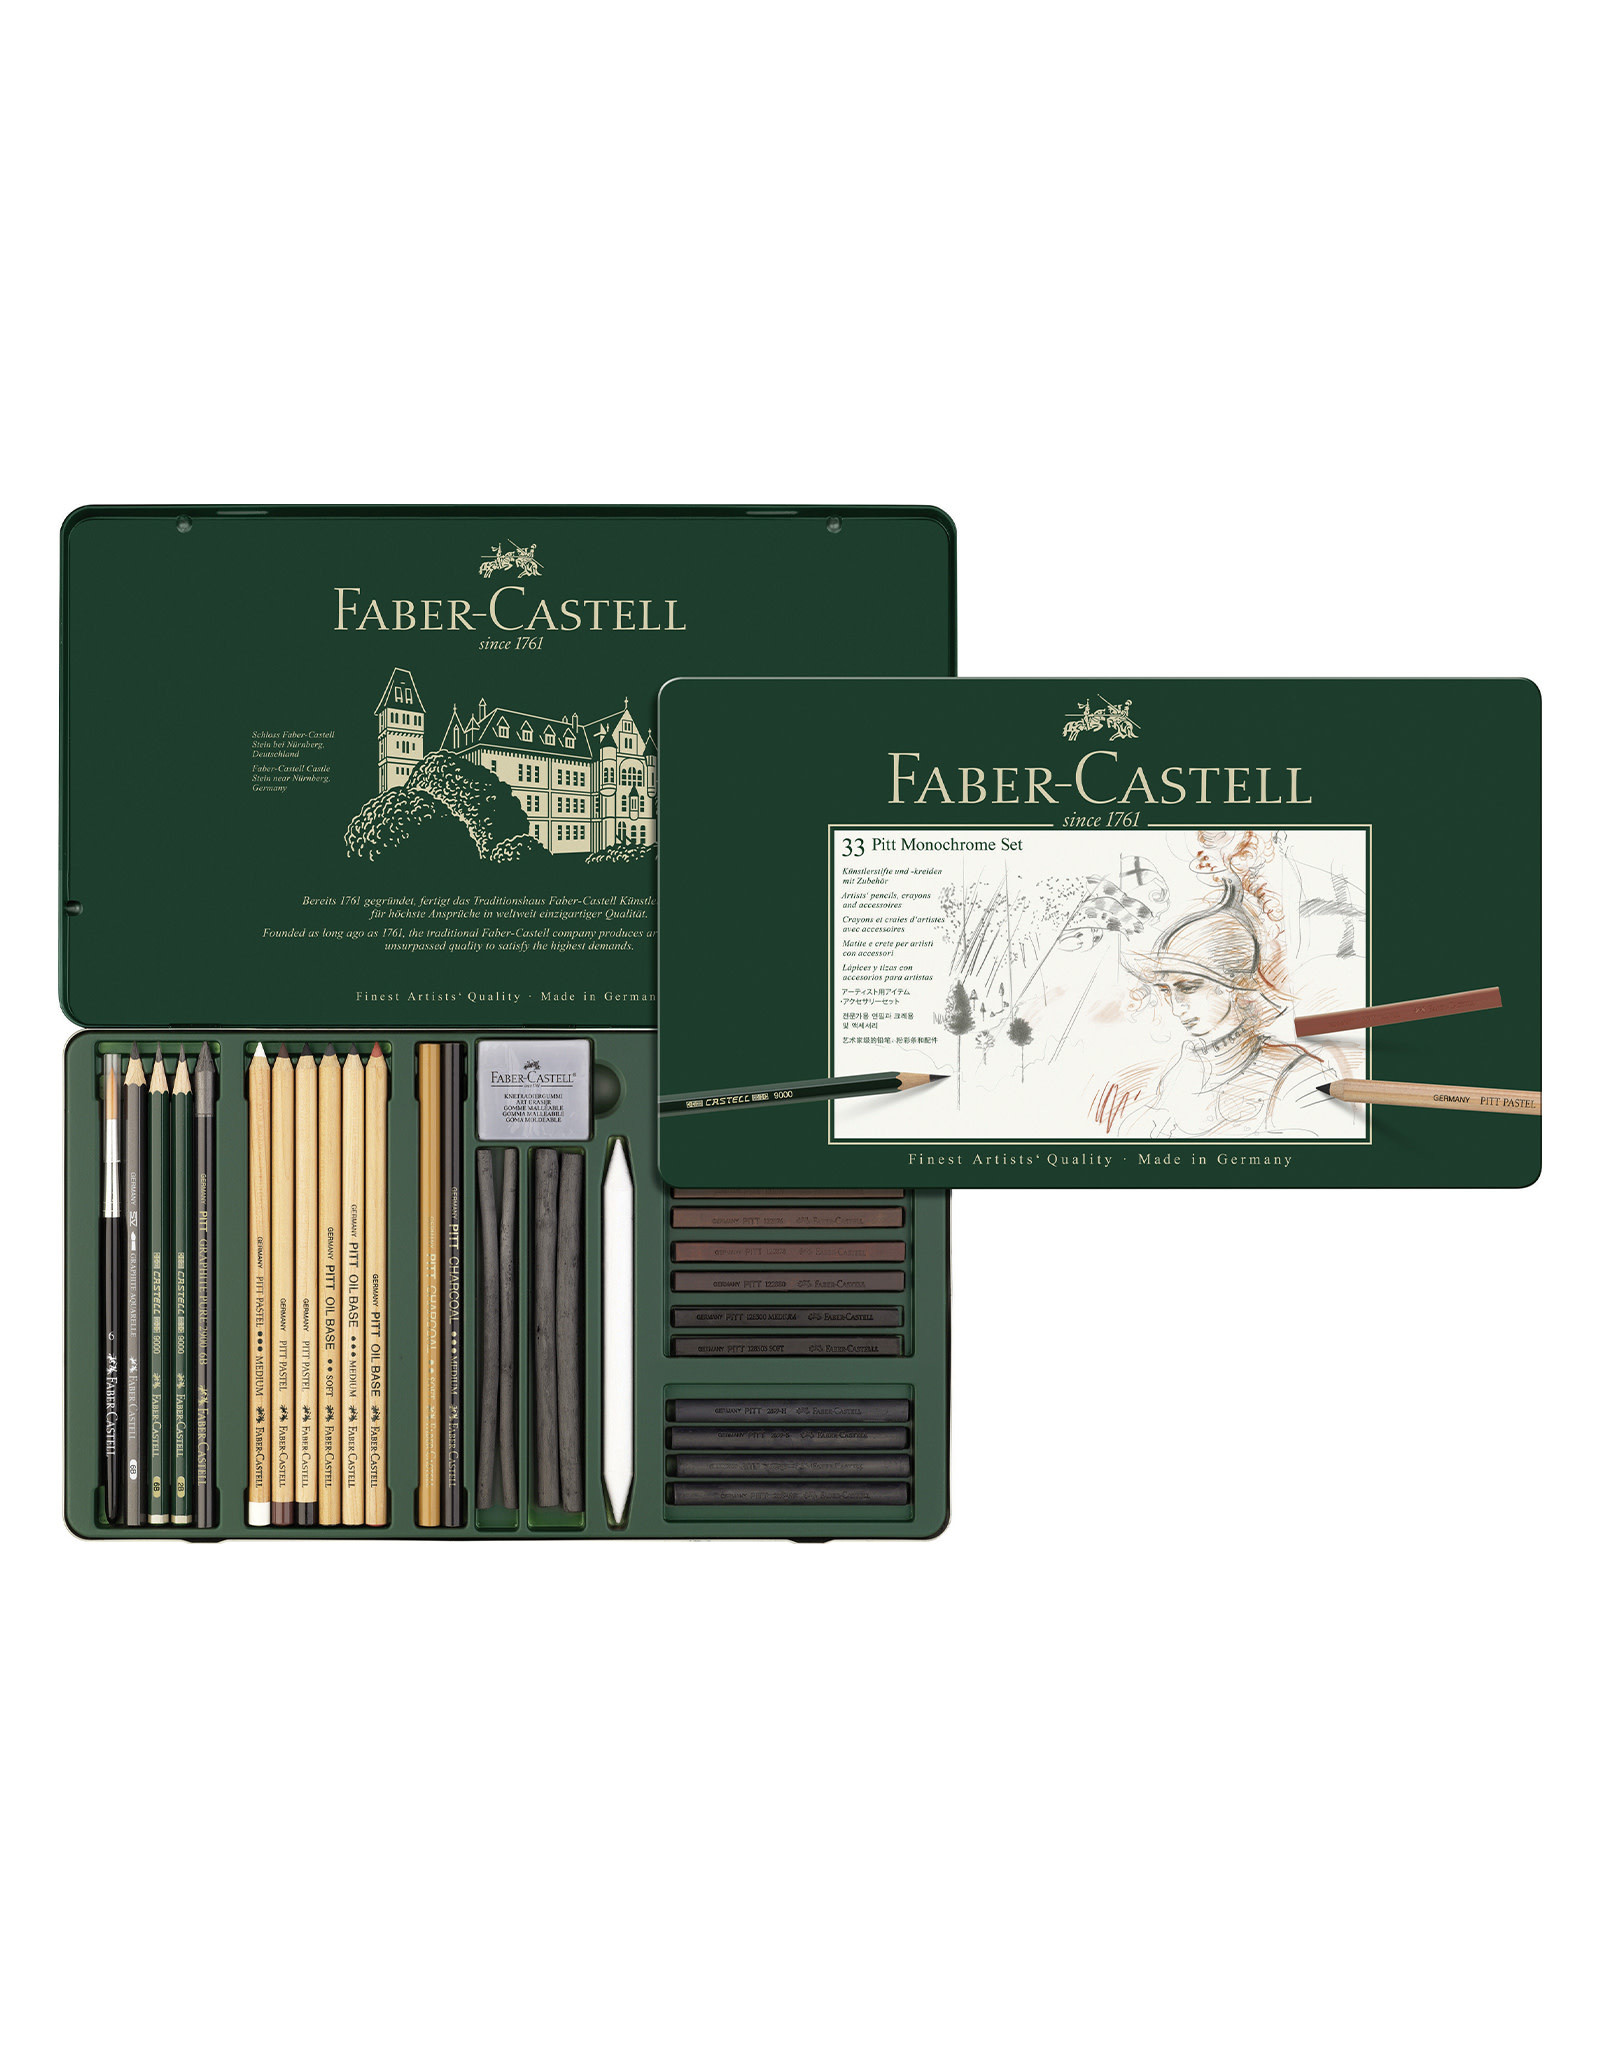 FABER-CASTELL Pitt® Monochrome Set of 33